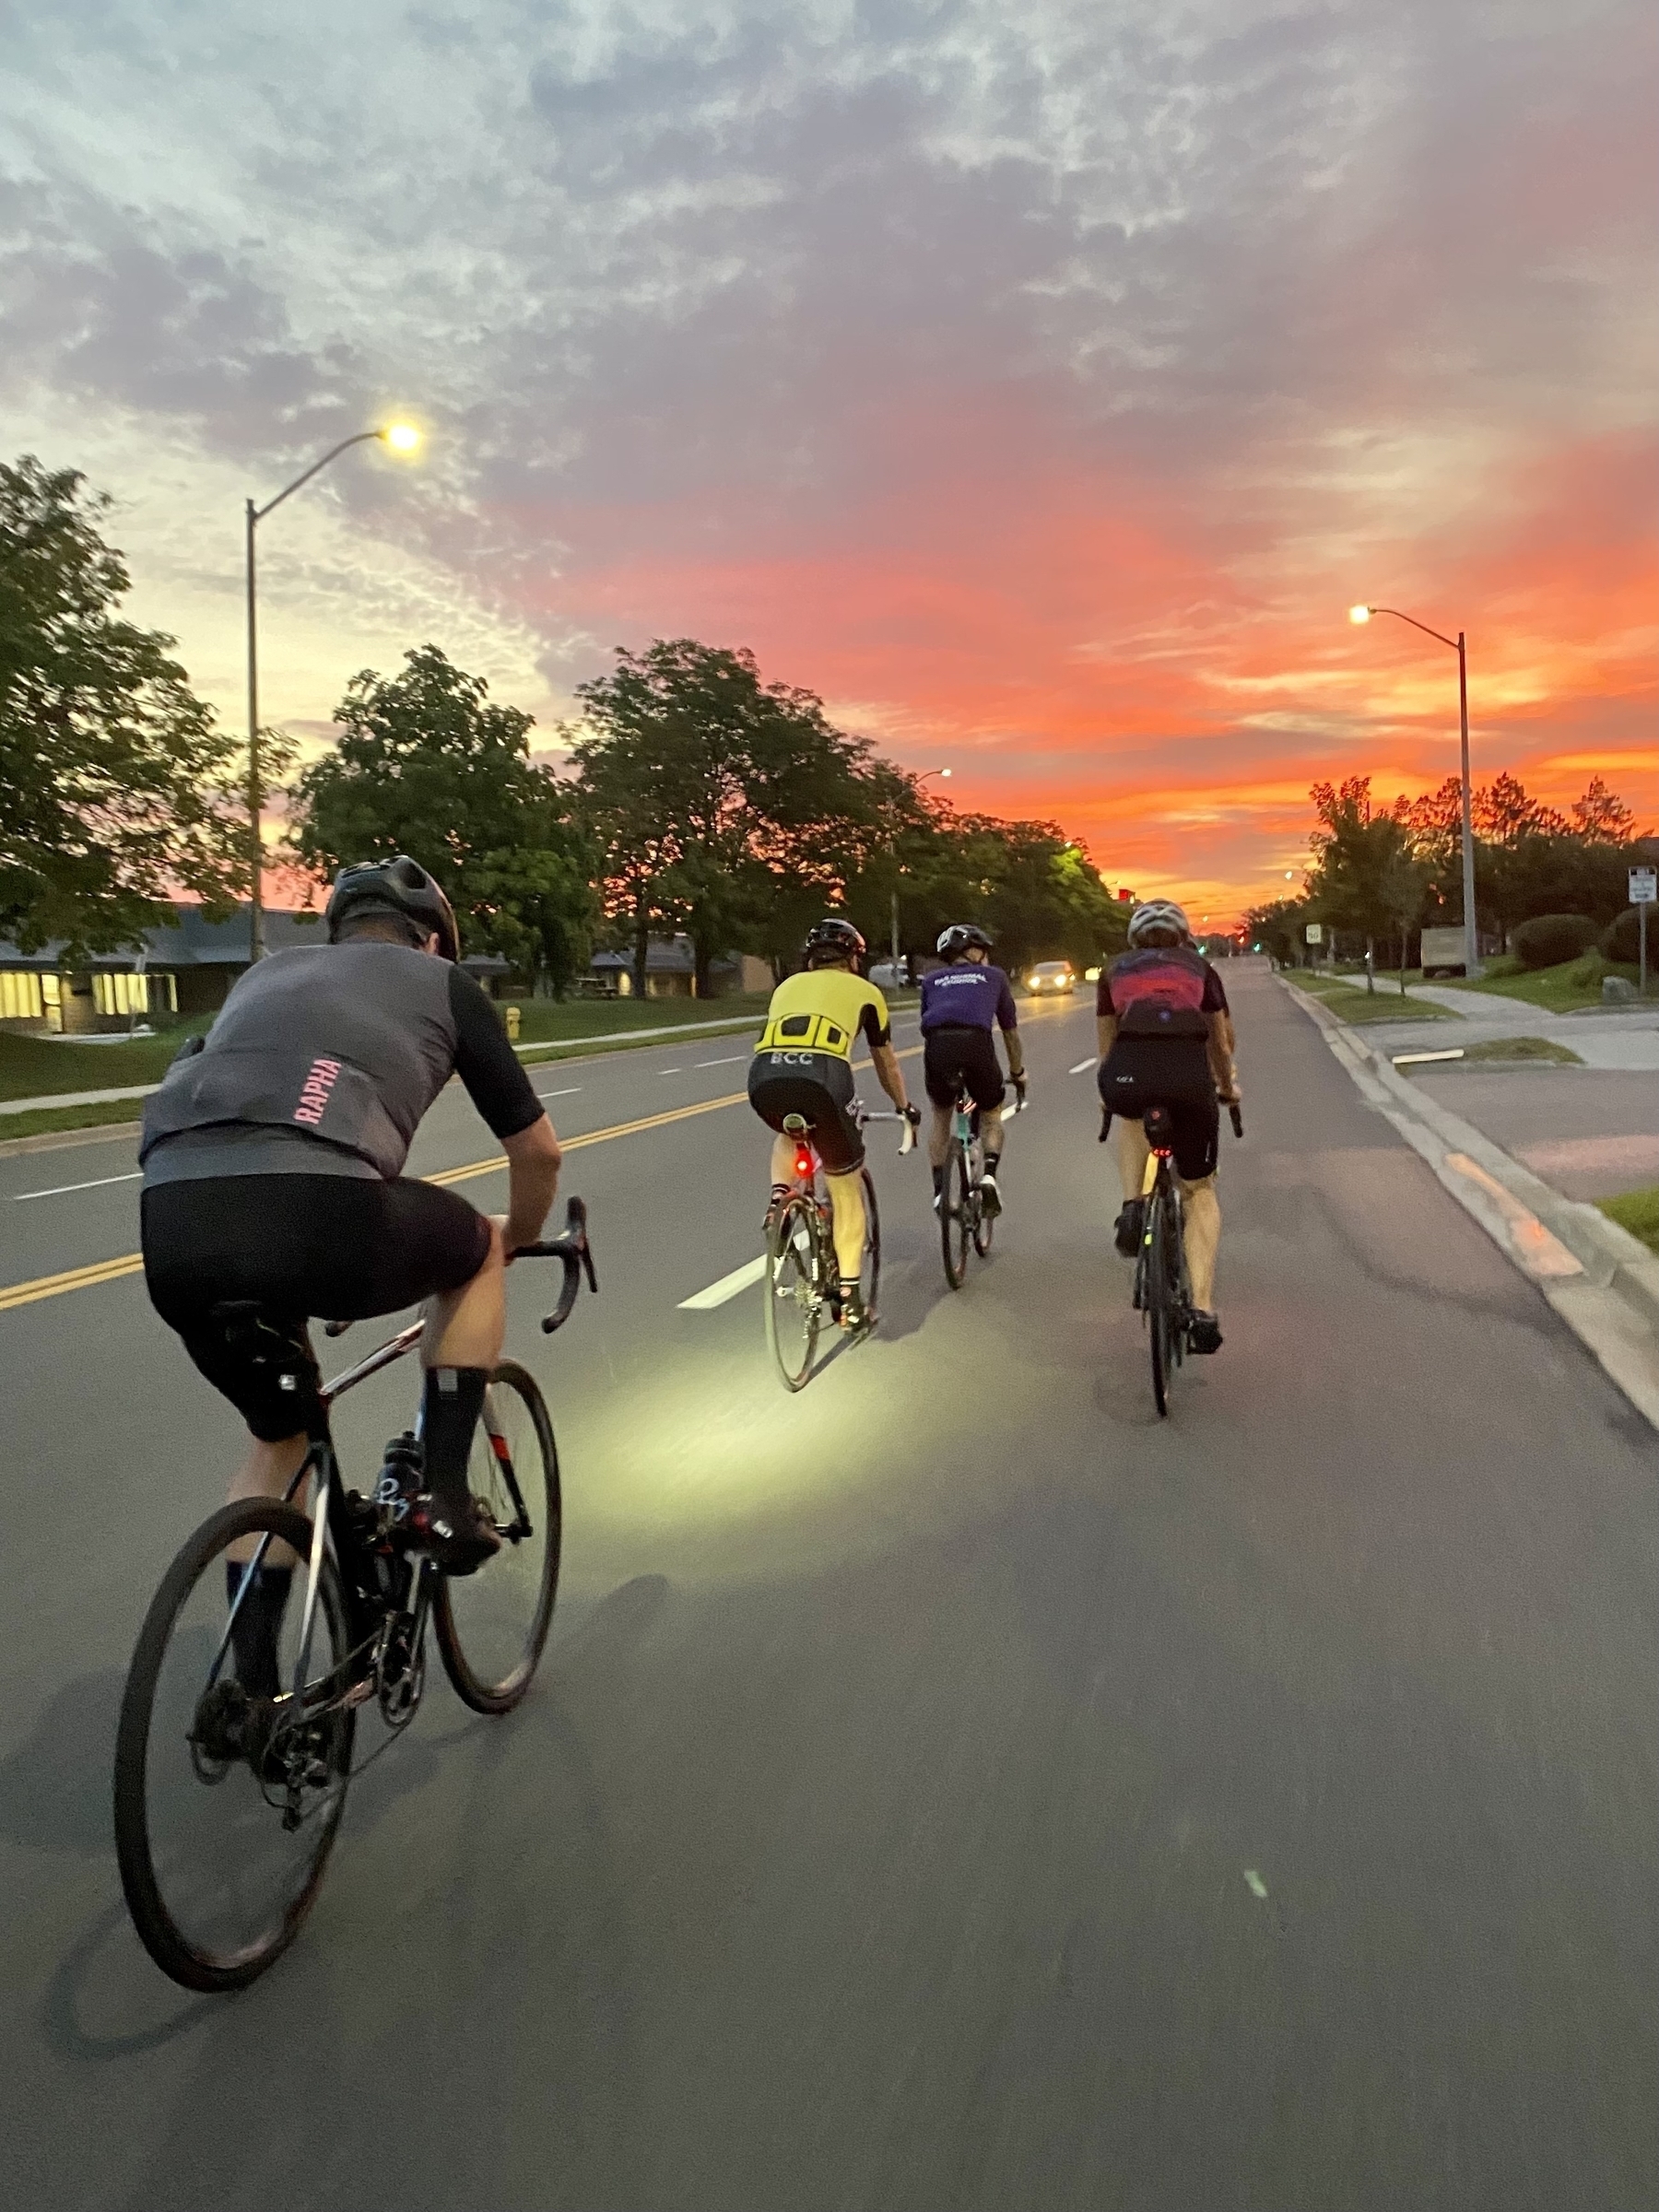 Cyclists riding towards an orange sunrise